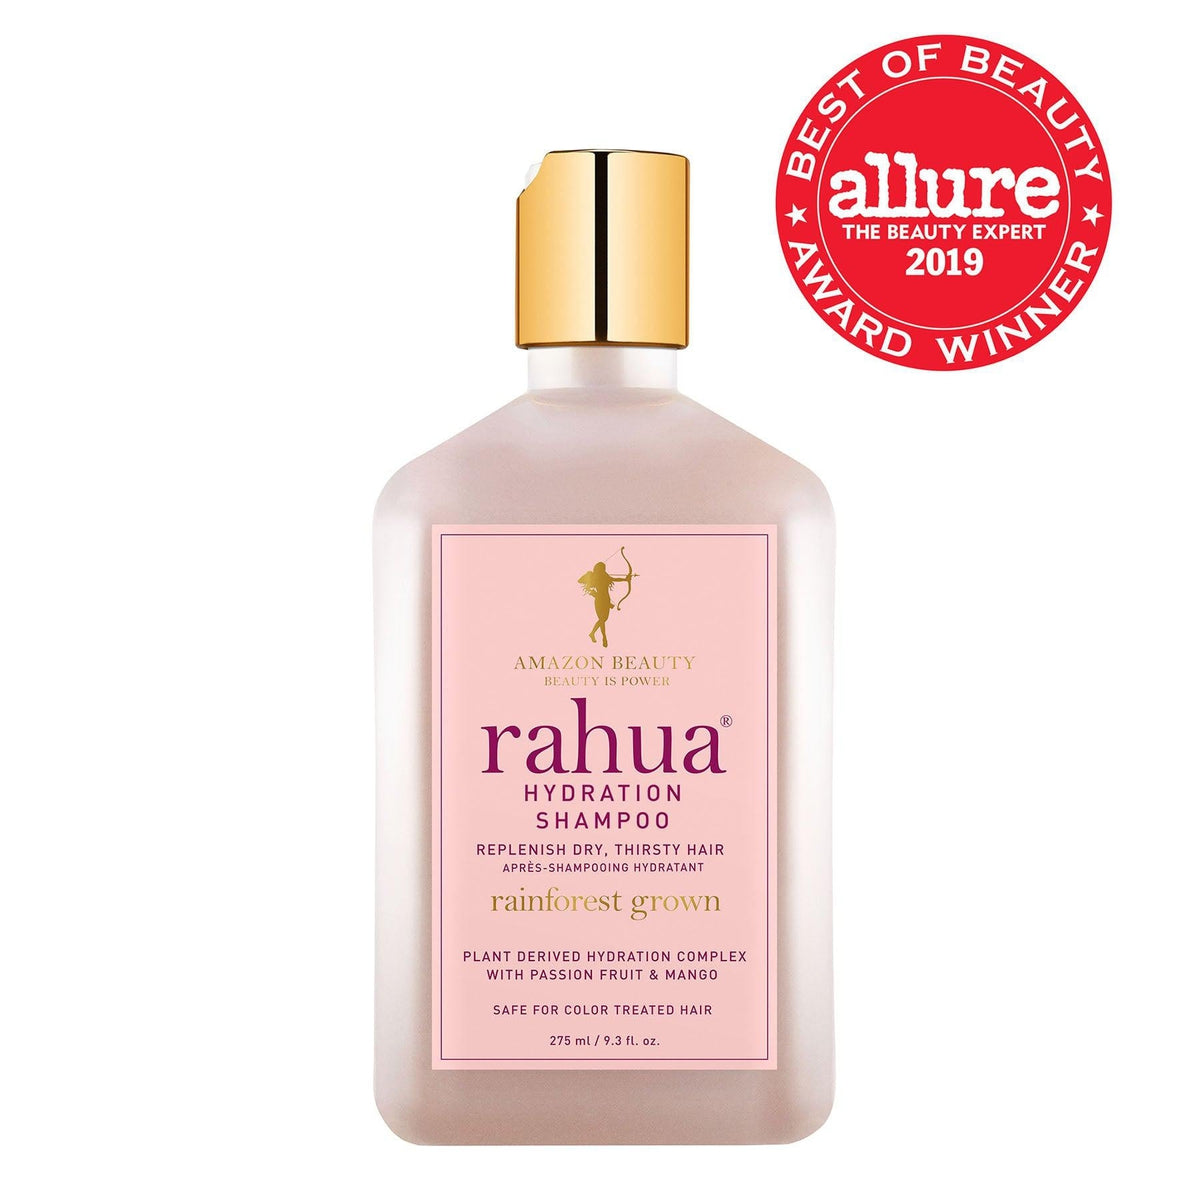 Modish sammentrækning fatning Rahua Hydration Shampoo | The Detox Market